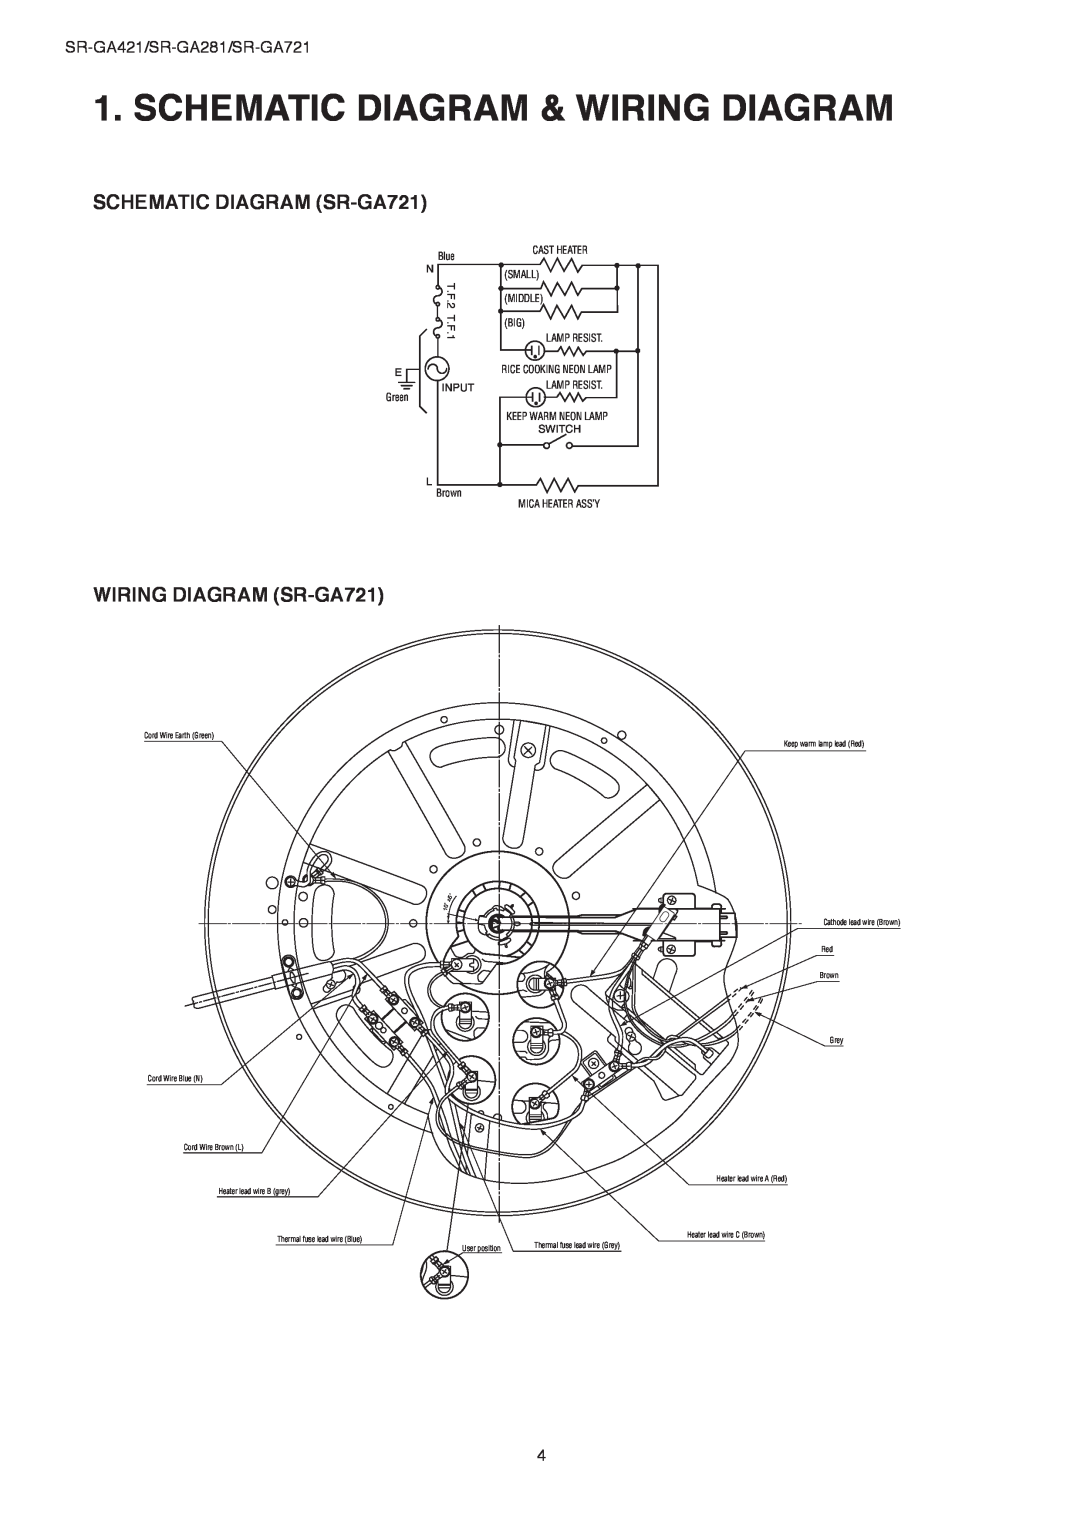 Panasonic SR-GA281 Schematic Diagram & Wiring Diagram, SCHEMATIC DIAGRAM SR-GA721, WIRING DIAGRAM SR-GA721, Blue N 